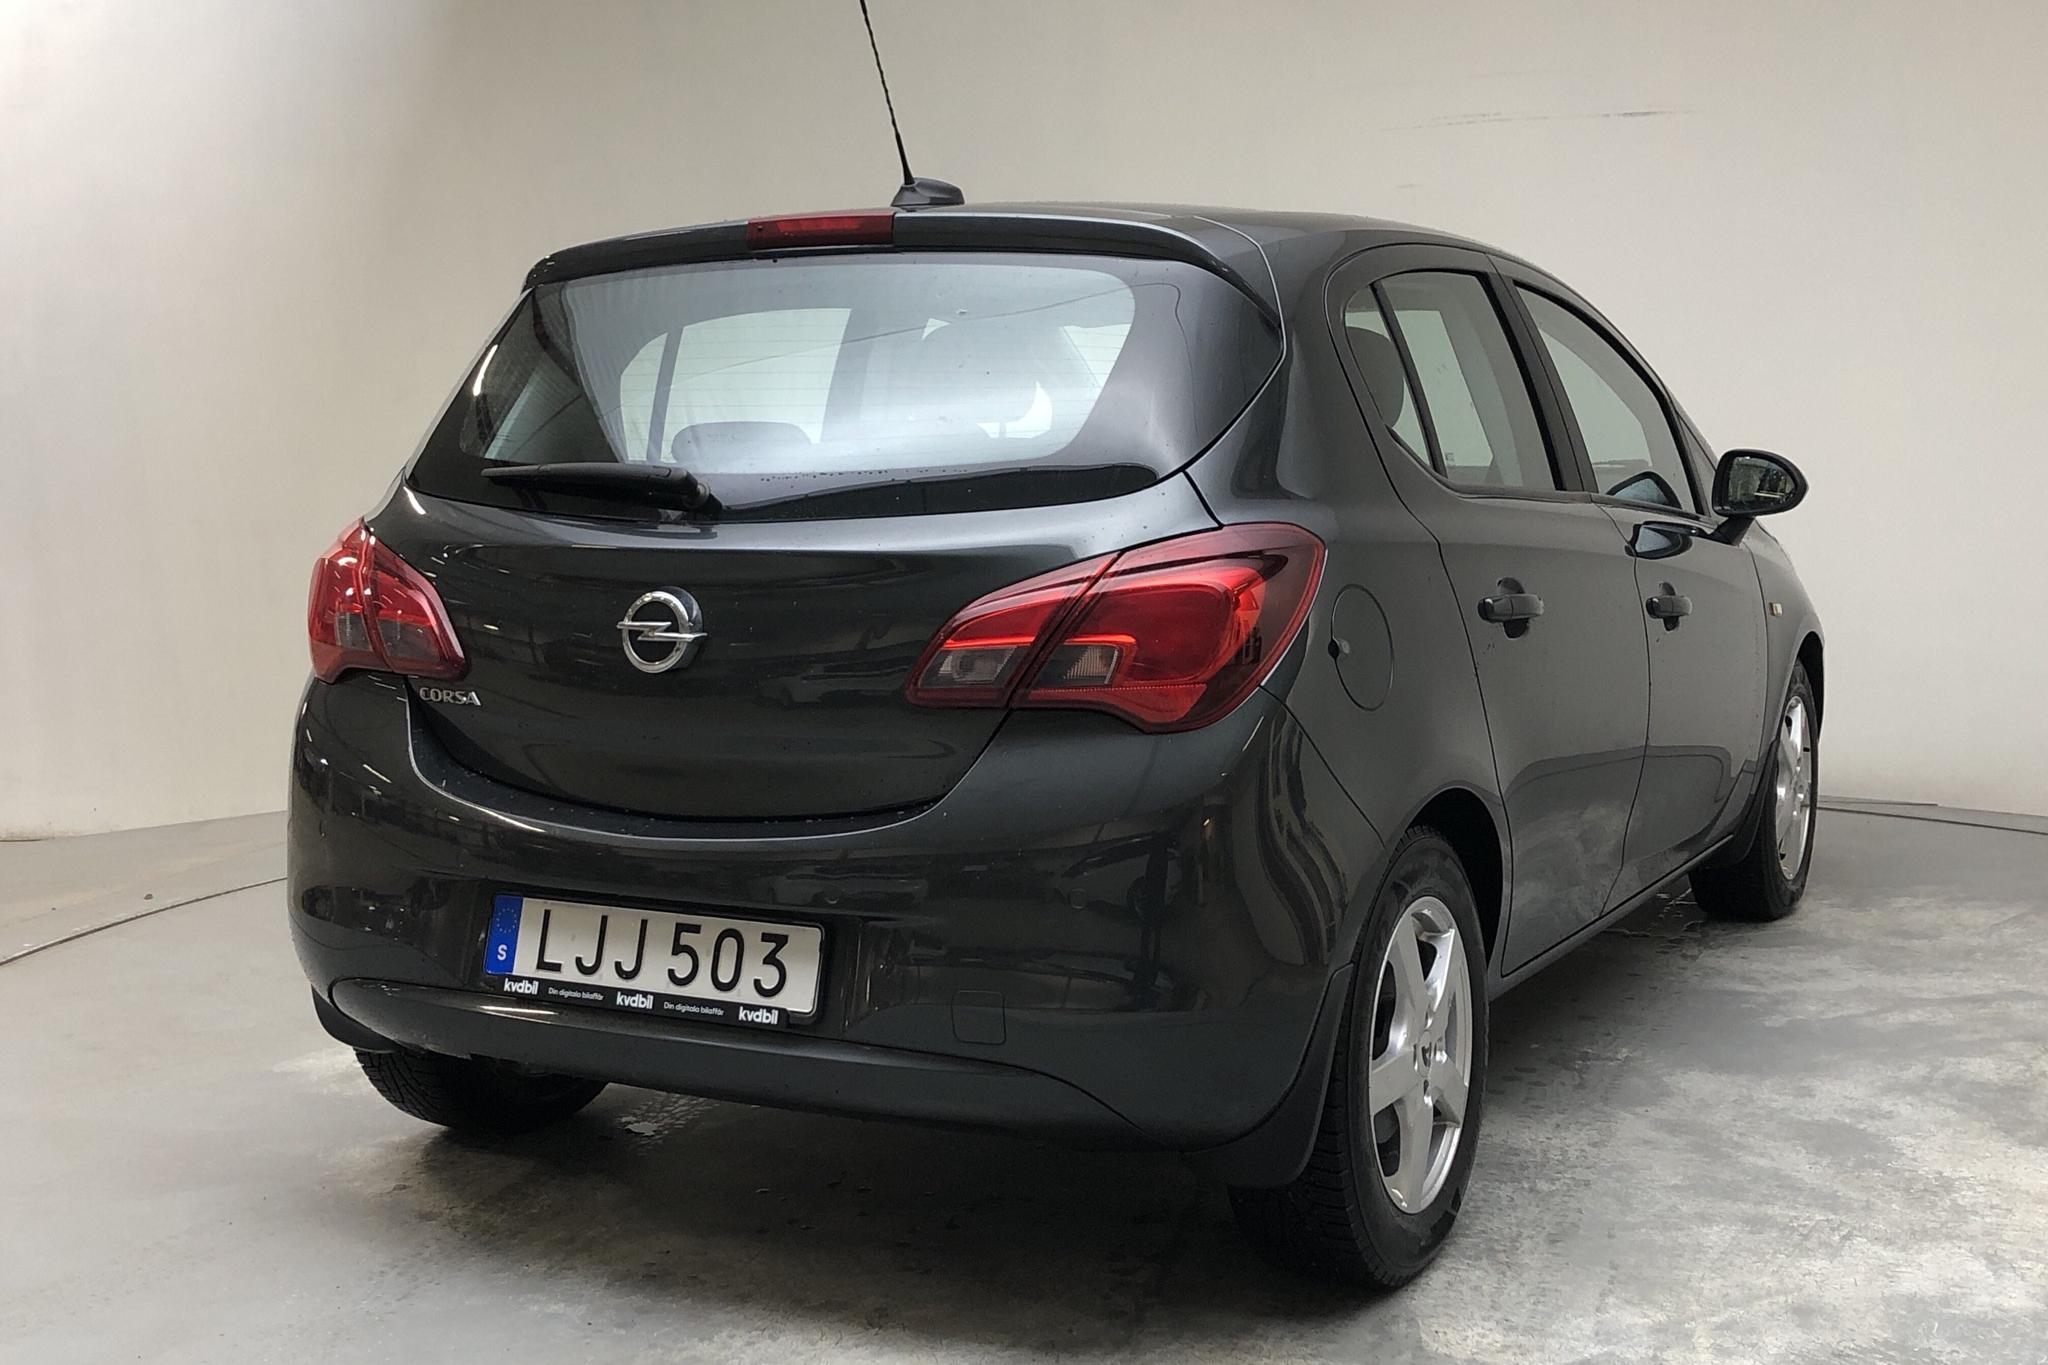 Opel Corsa 1.4 ECOTEC 5dr (90hk) - 89 580 km - Manual - gray - 2018